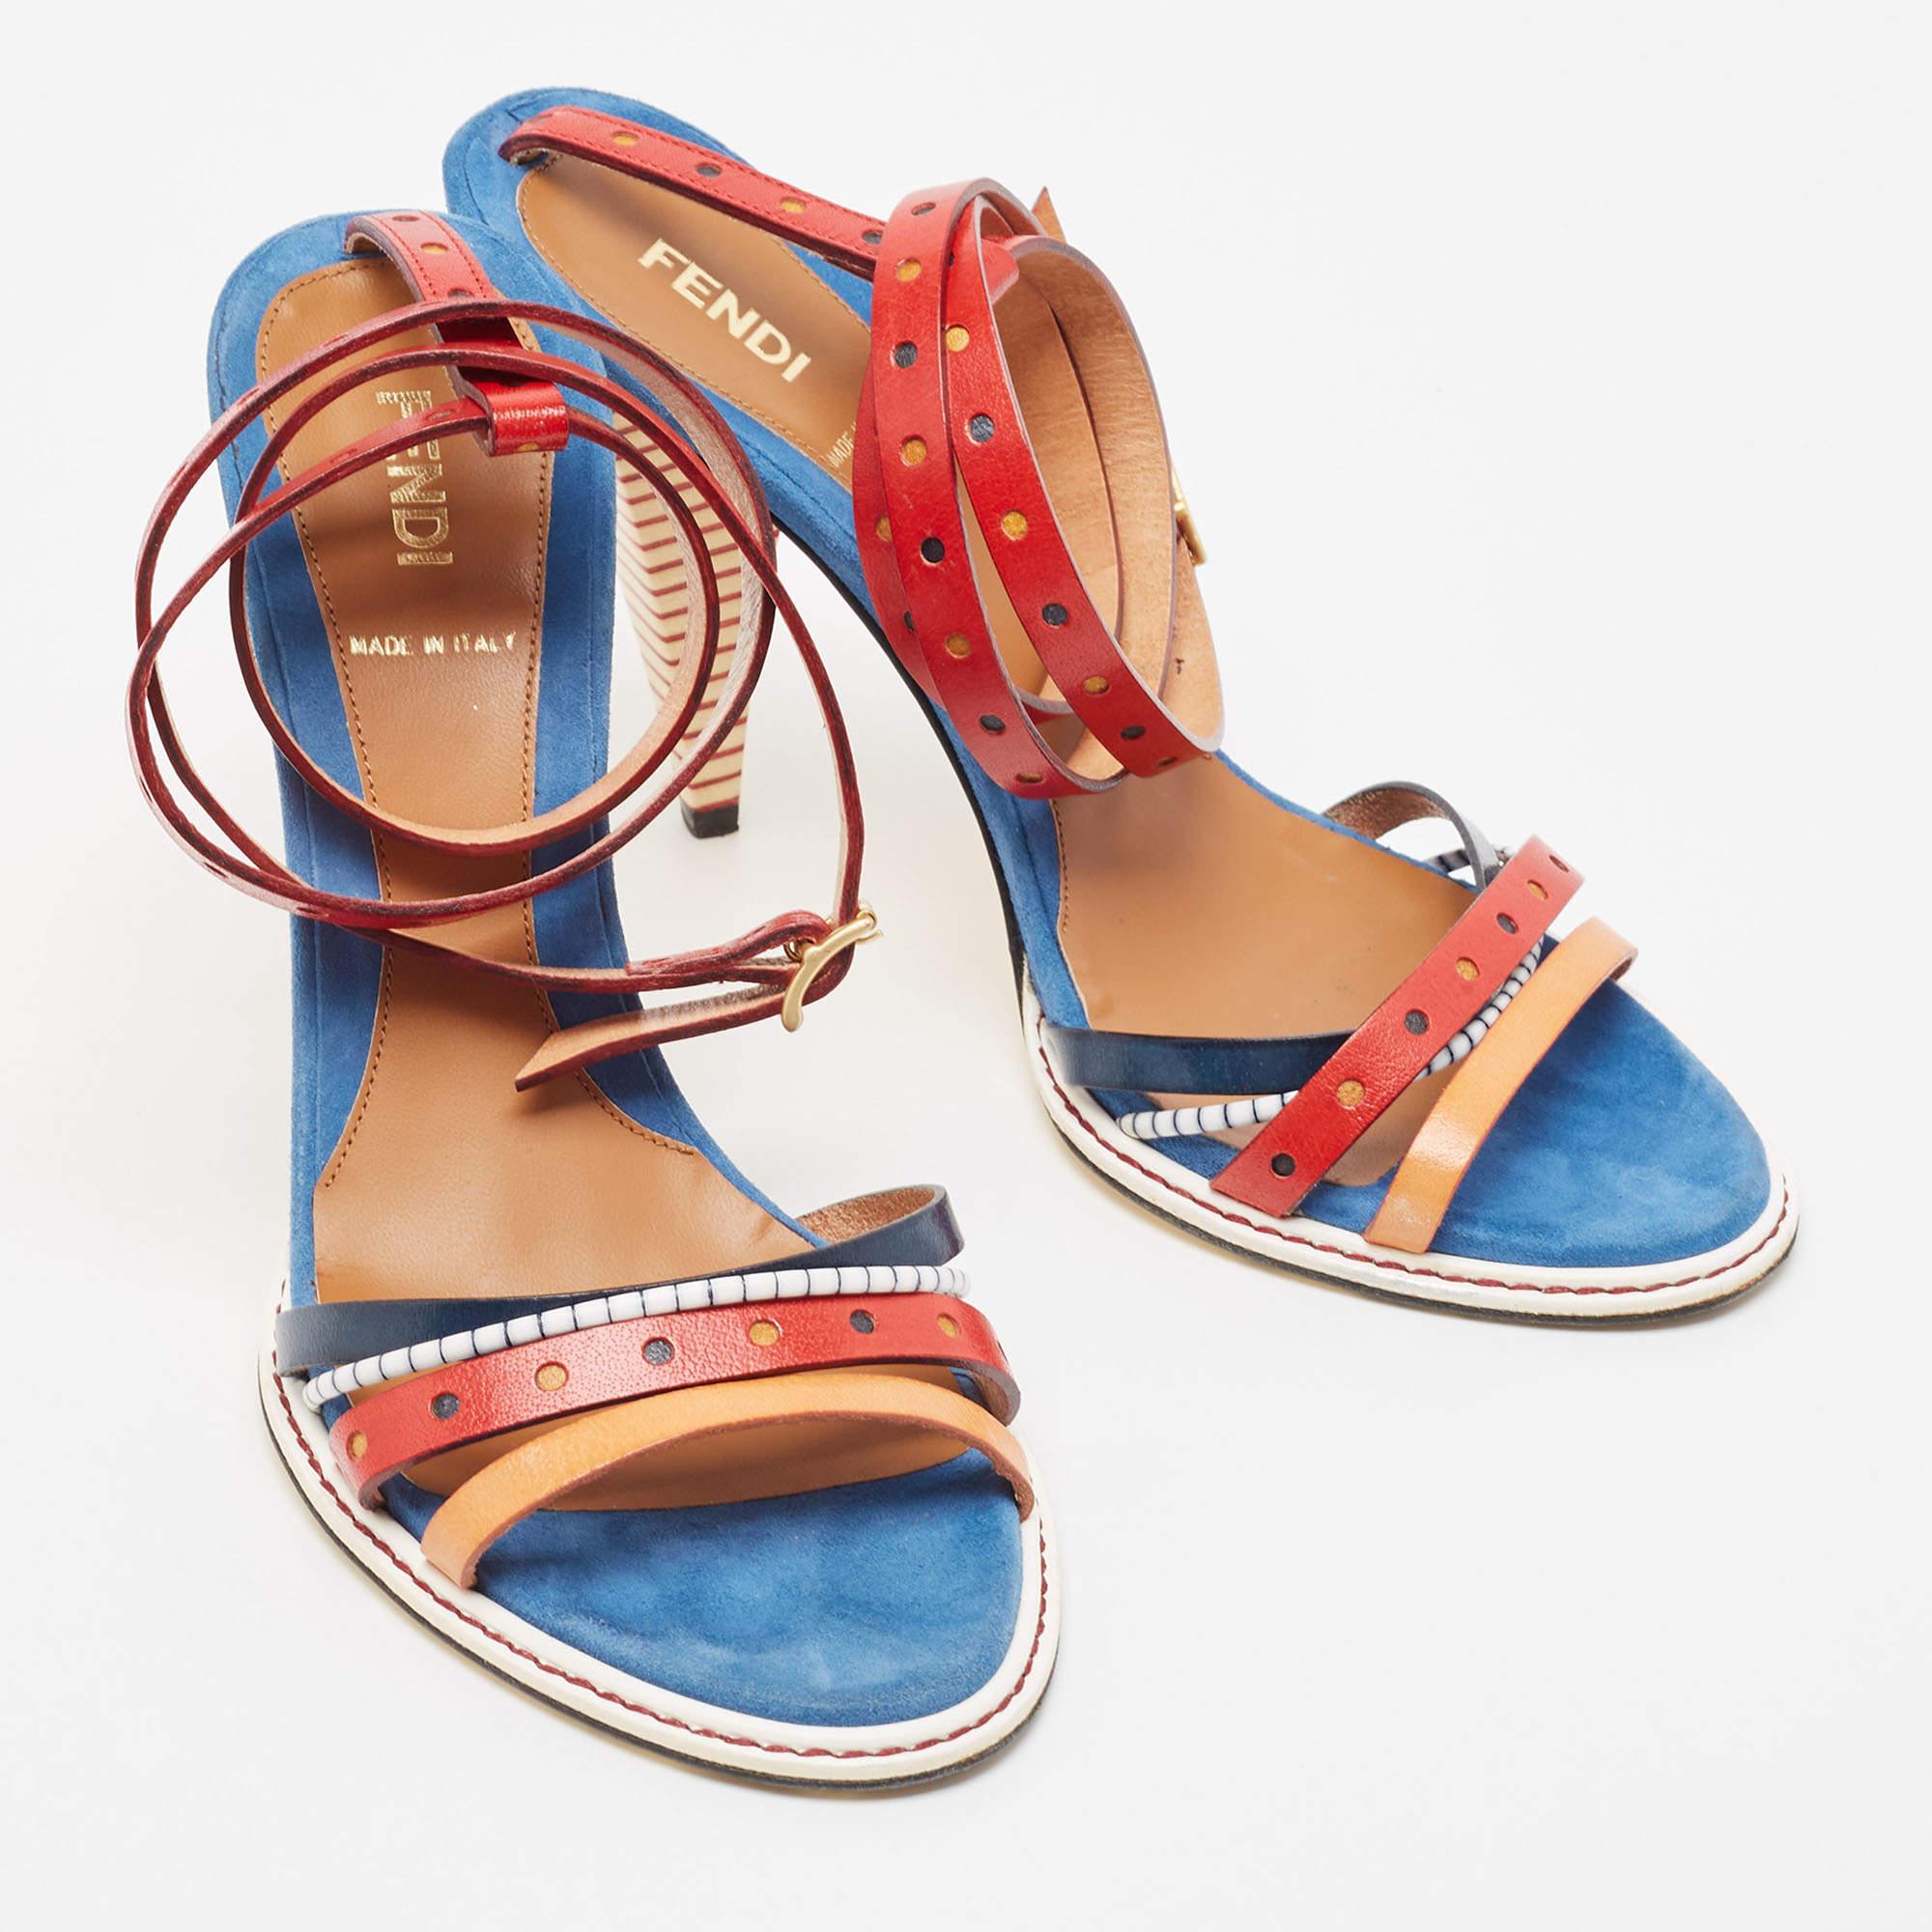 Fendi Multicolor Leather Strappy Ankle Wrap Sandals Size 38.5 2